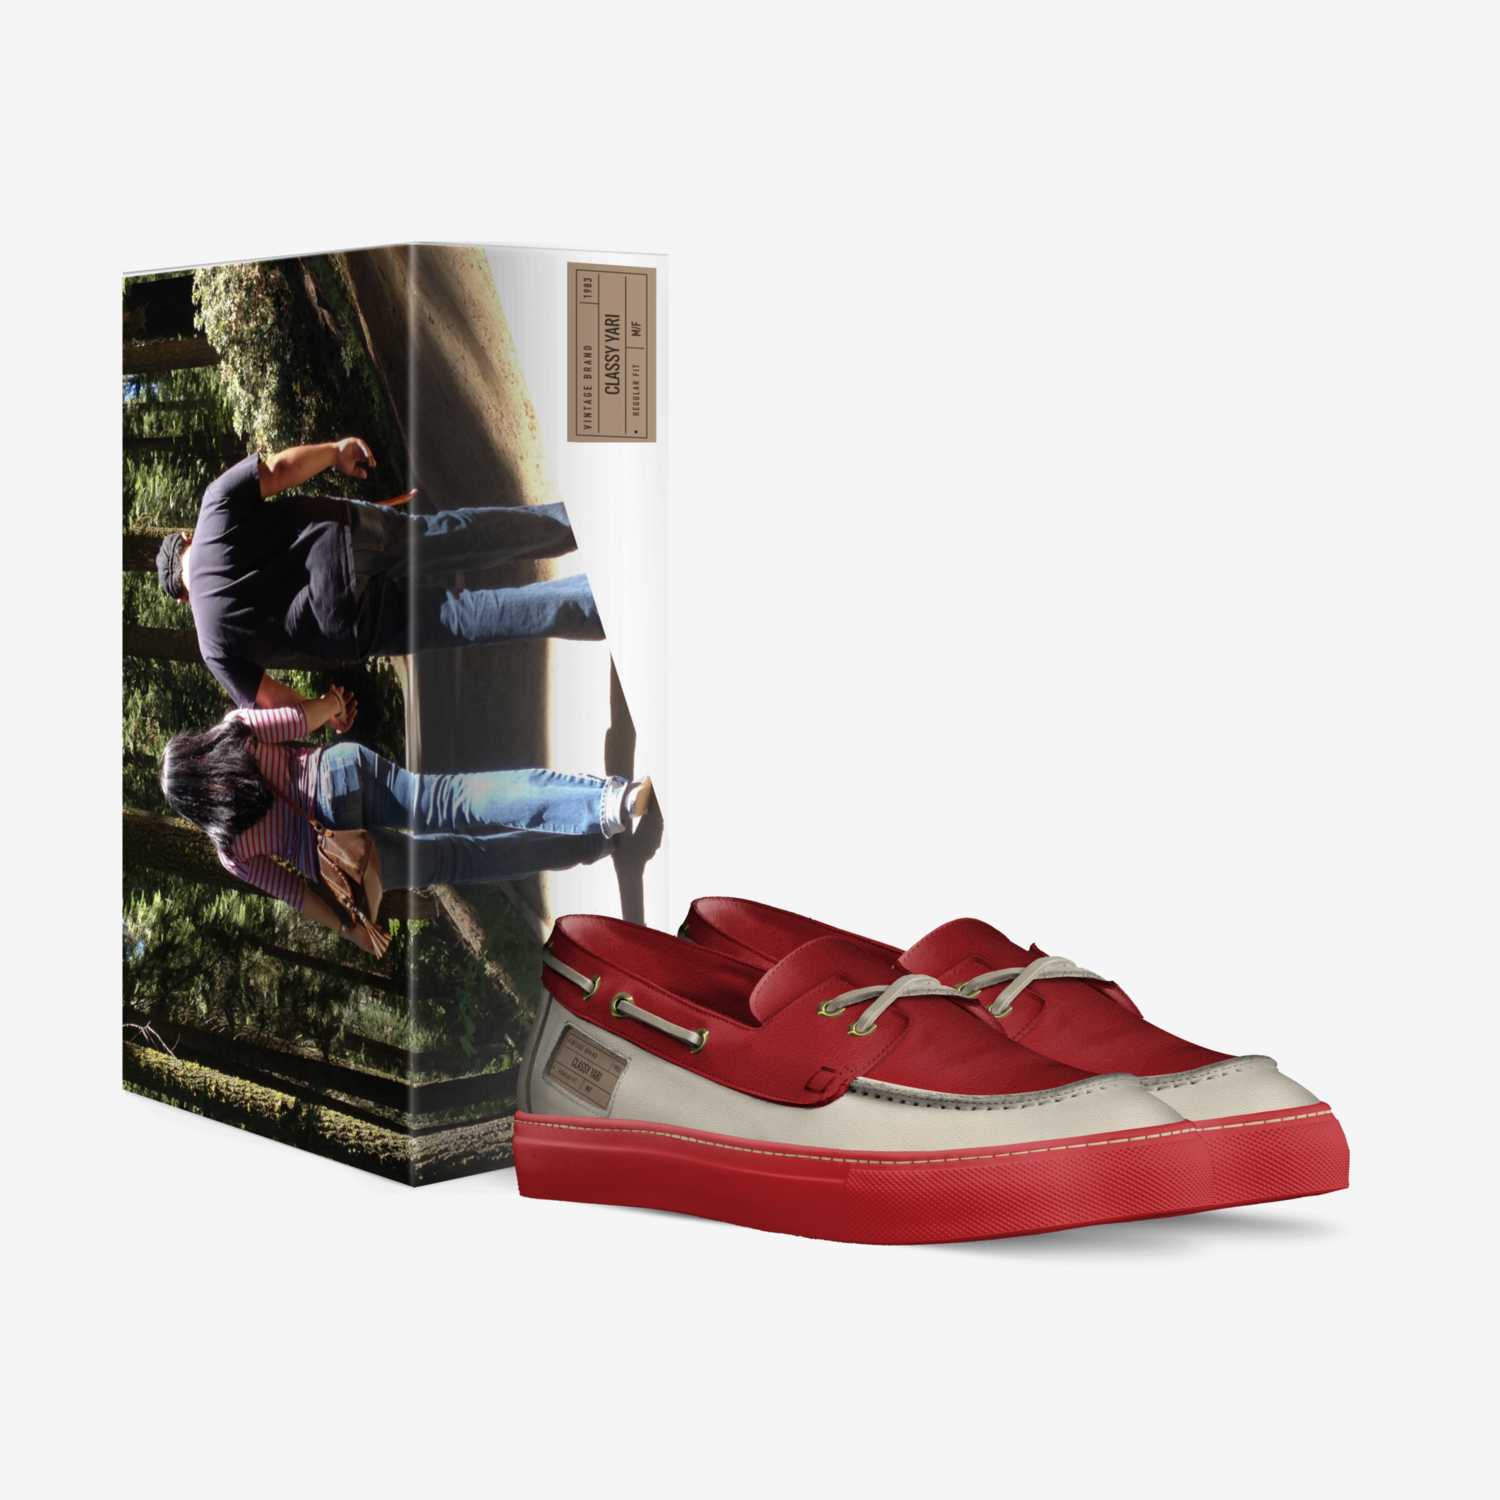 CLASSY YARI custom made in Italy shoes by Nelson Cruz | Box view